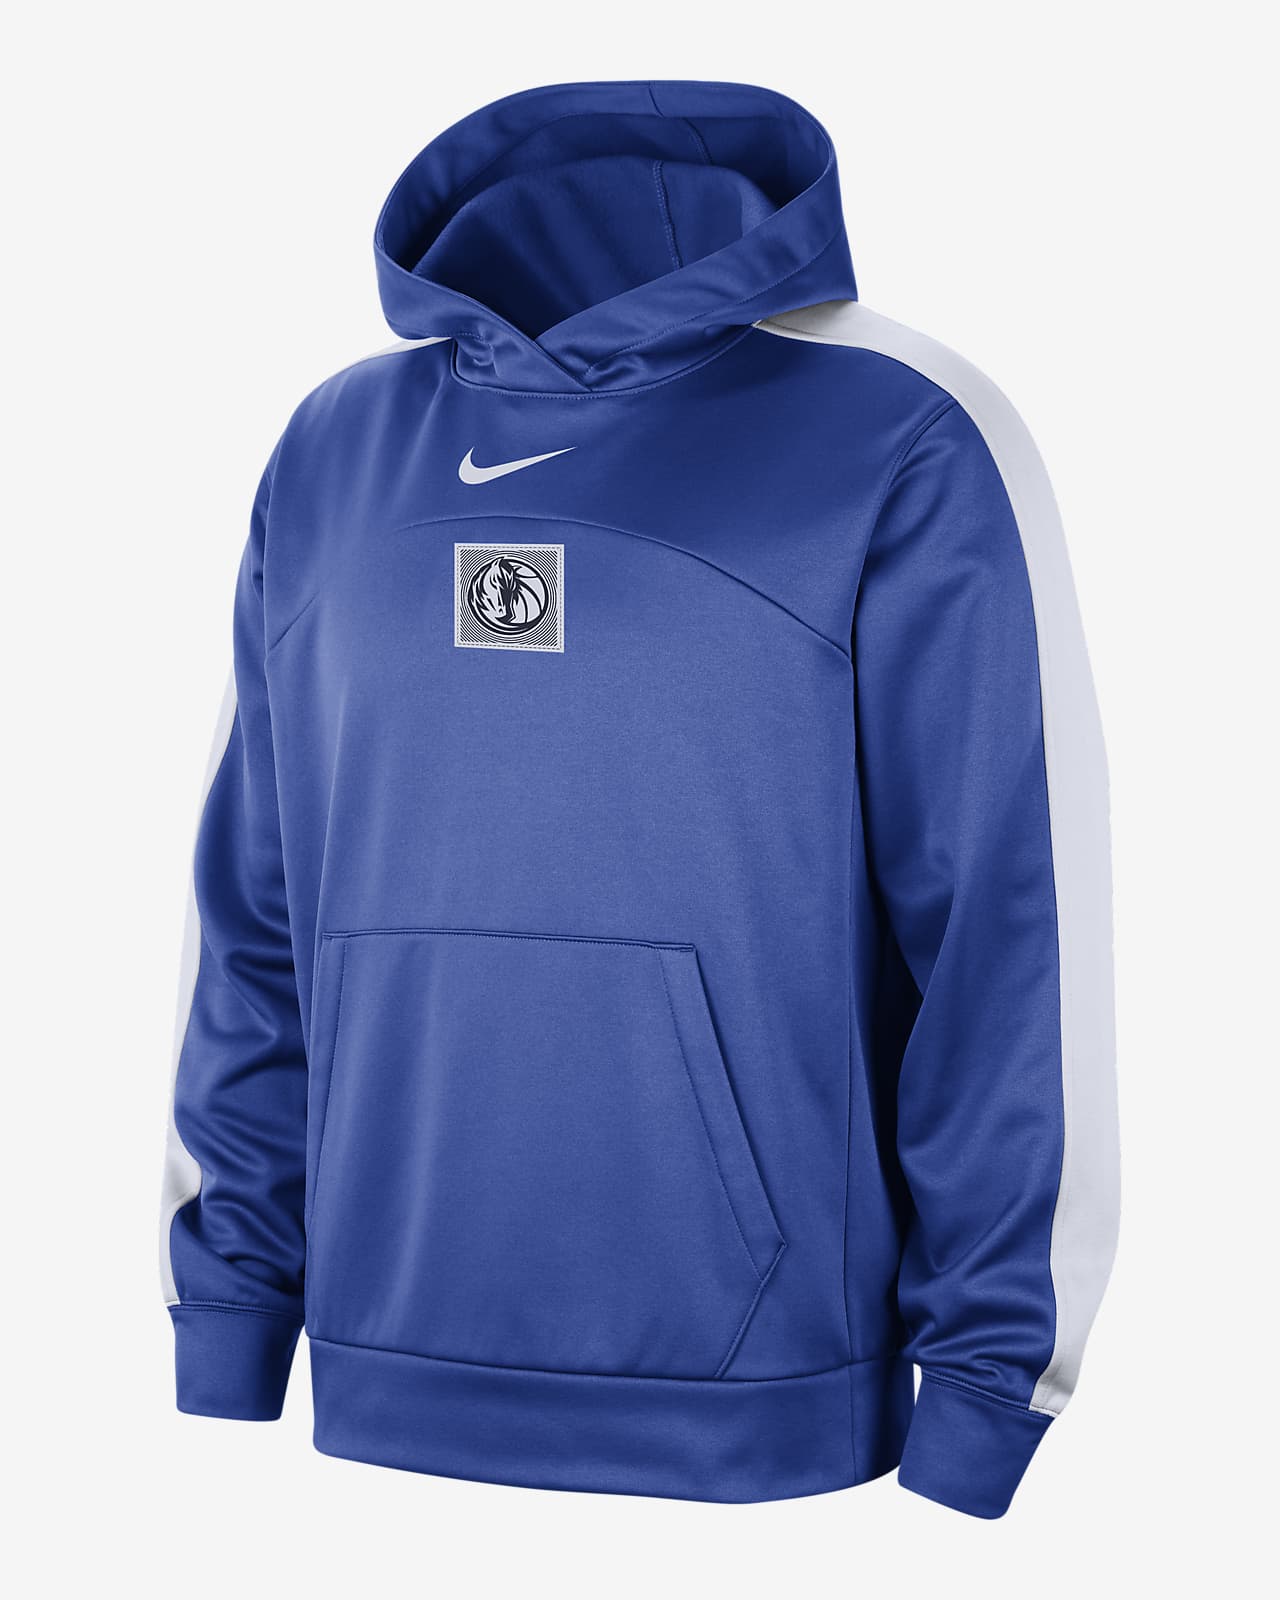 Nike Men's Dallas Mavericks Royal Fleece Pullover Hoodie, Large